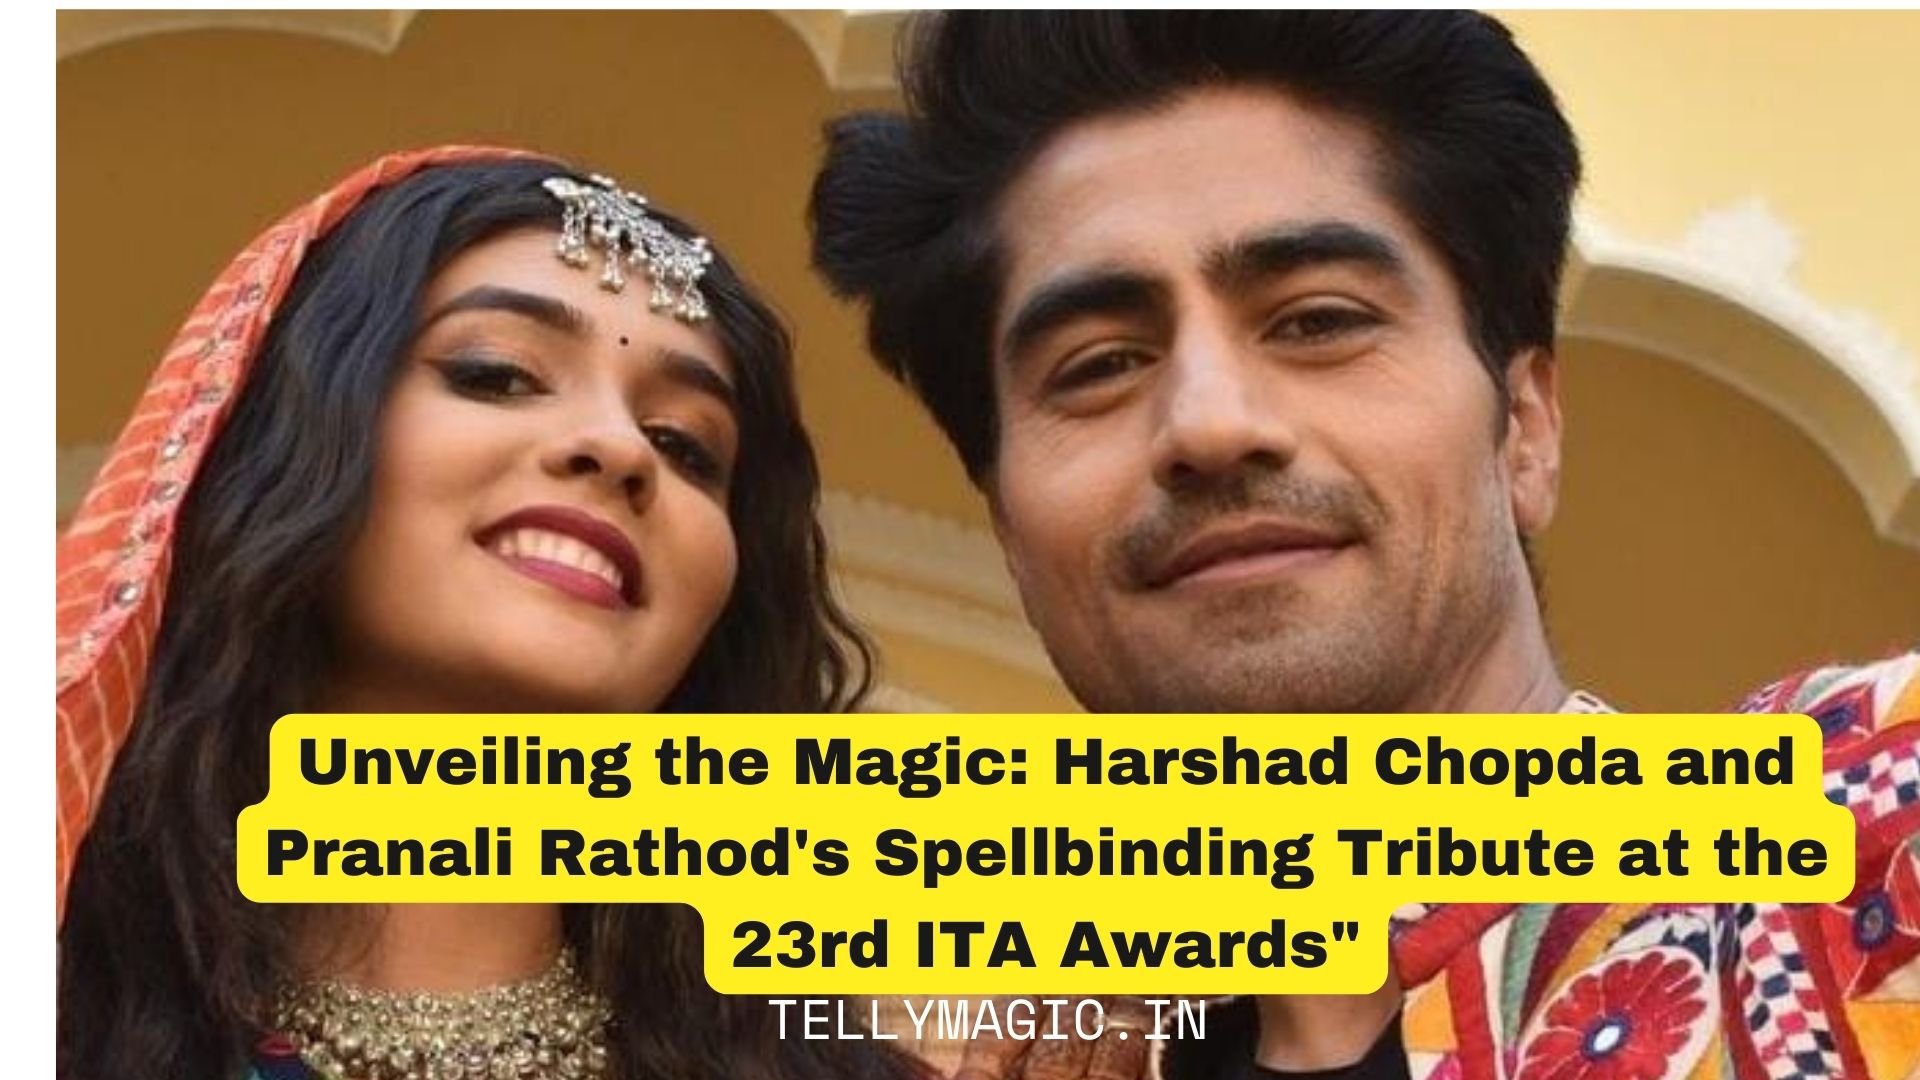 Unveiling the Magic Harshad Chopda and Pranali Rathod’s Spellbinding Tribute at the 23rd ITA Awards